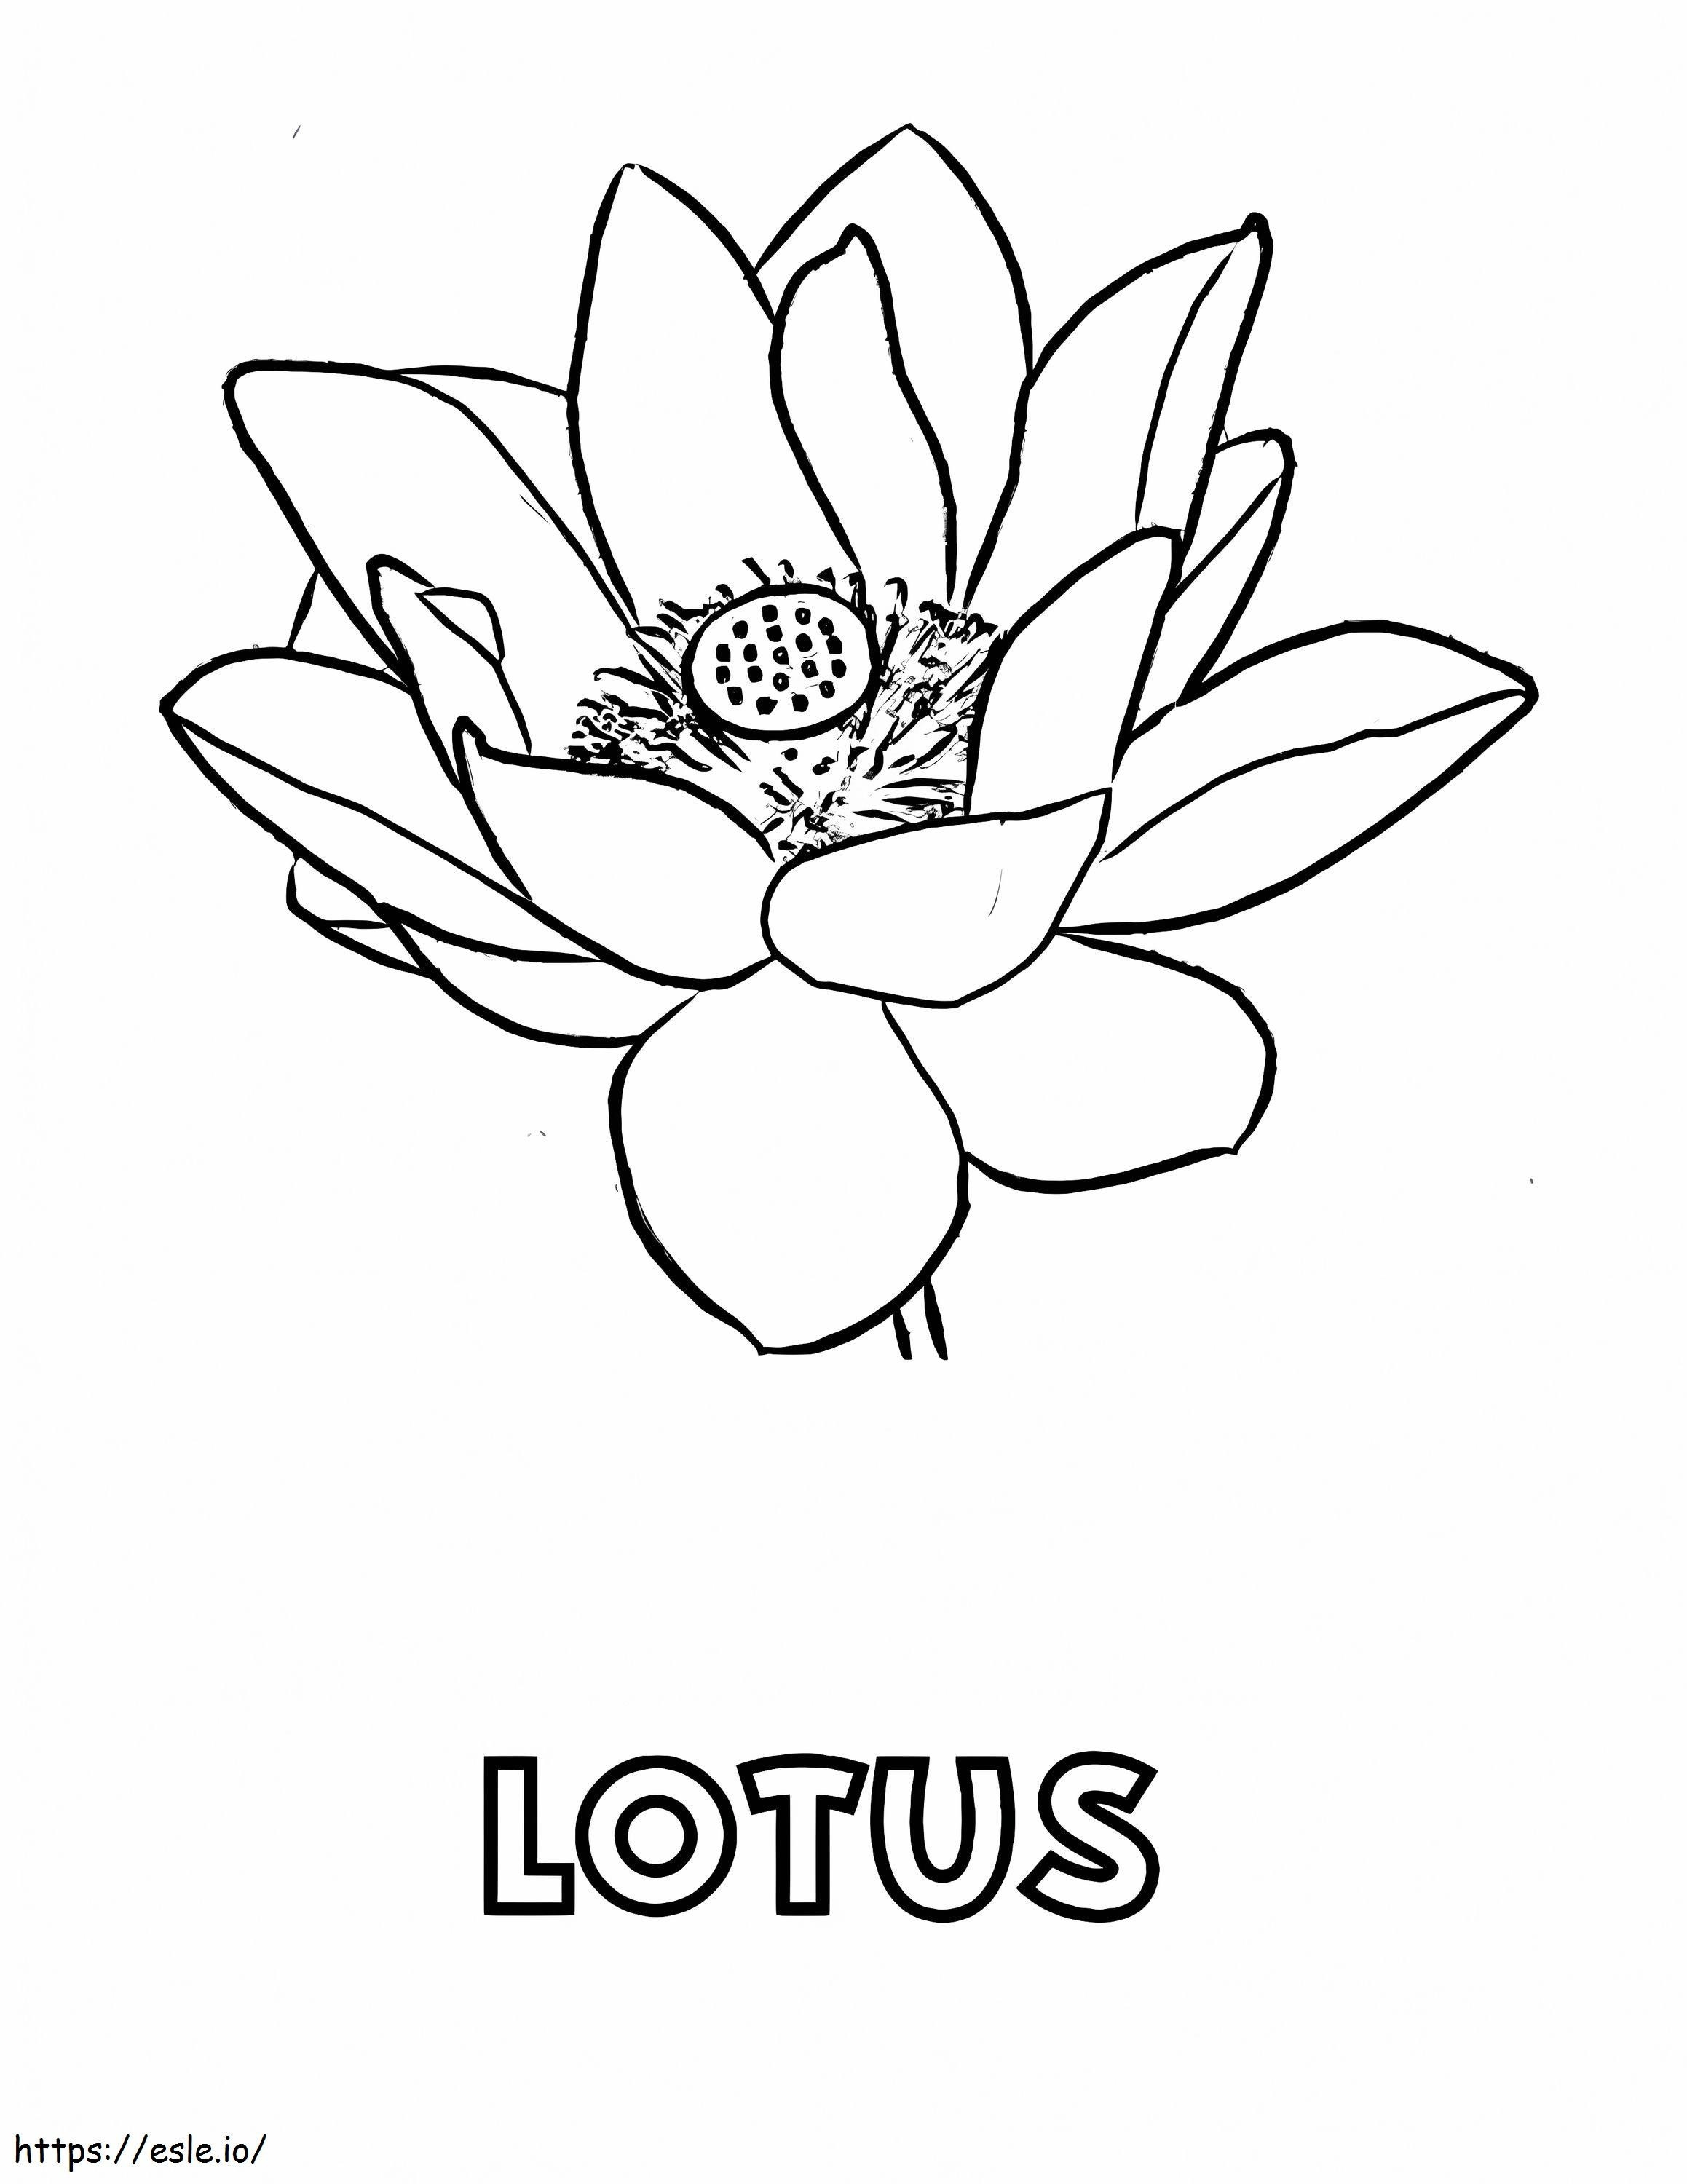 Druckbare Lotusblume ausmalbilder